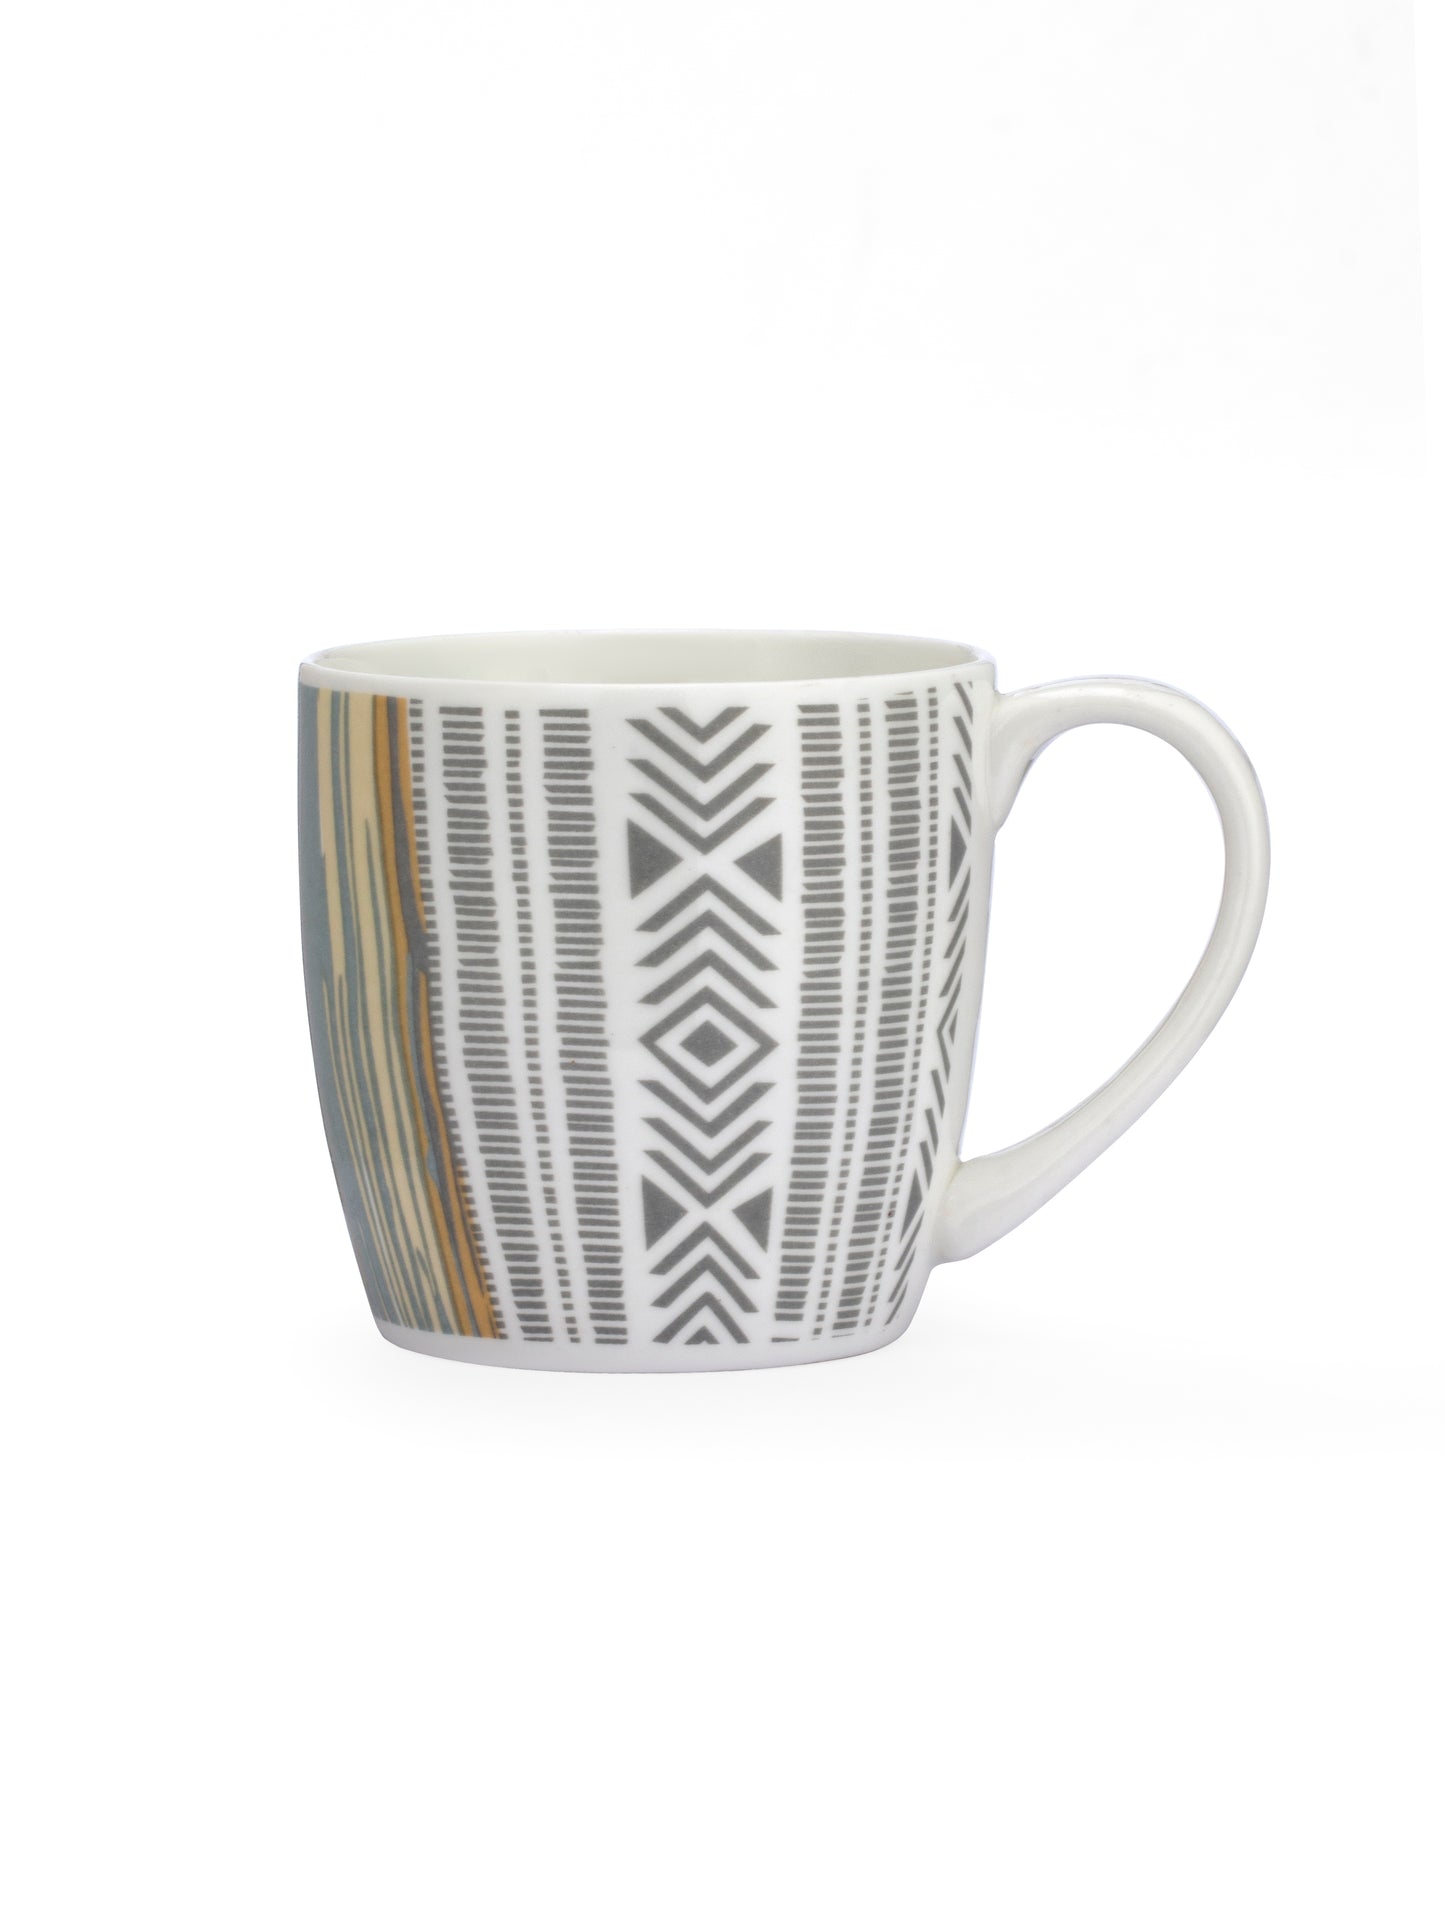 Alton Hilton Coffee & Tea Mugs, 200ml, Set of 6 (H377)